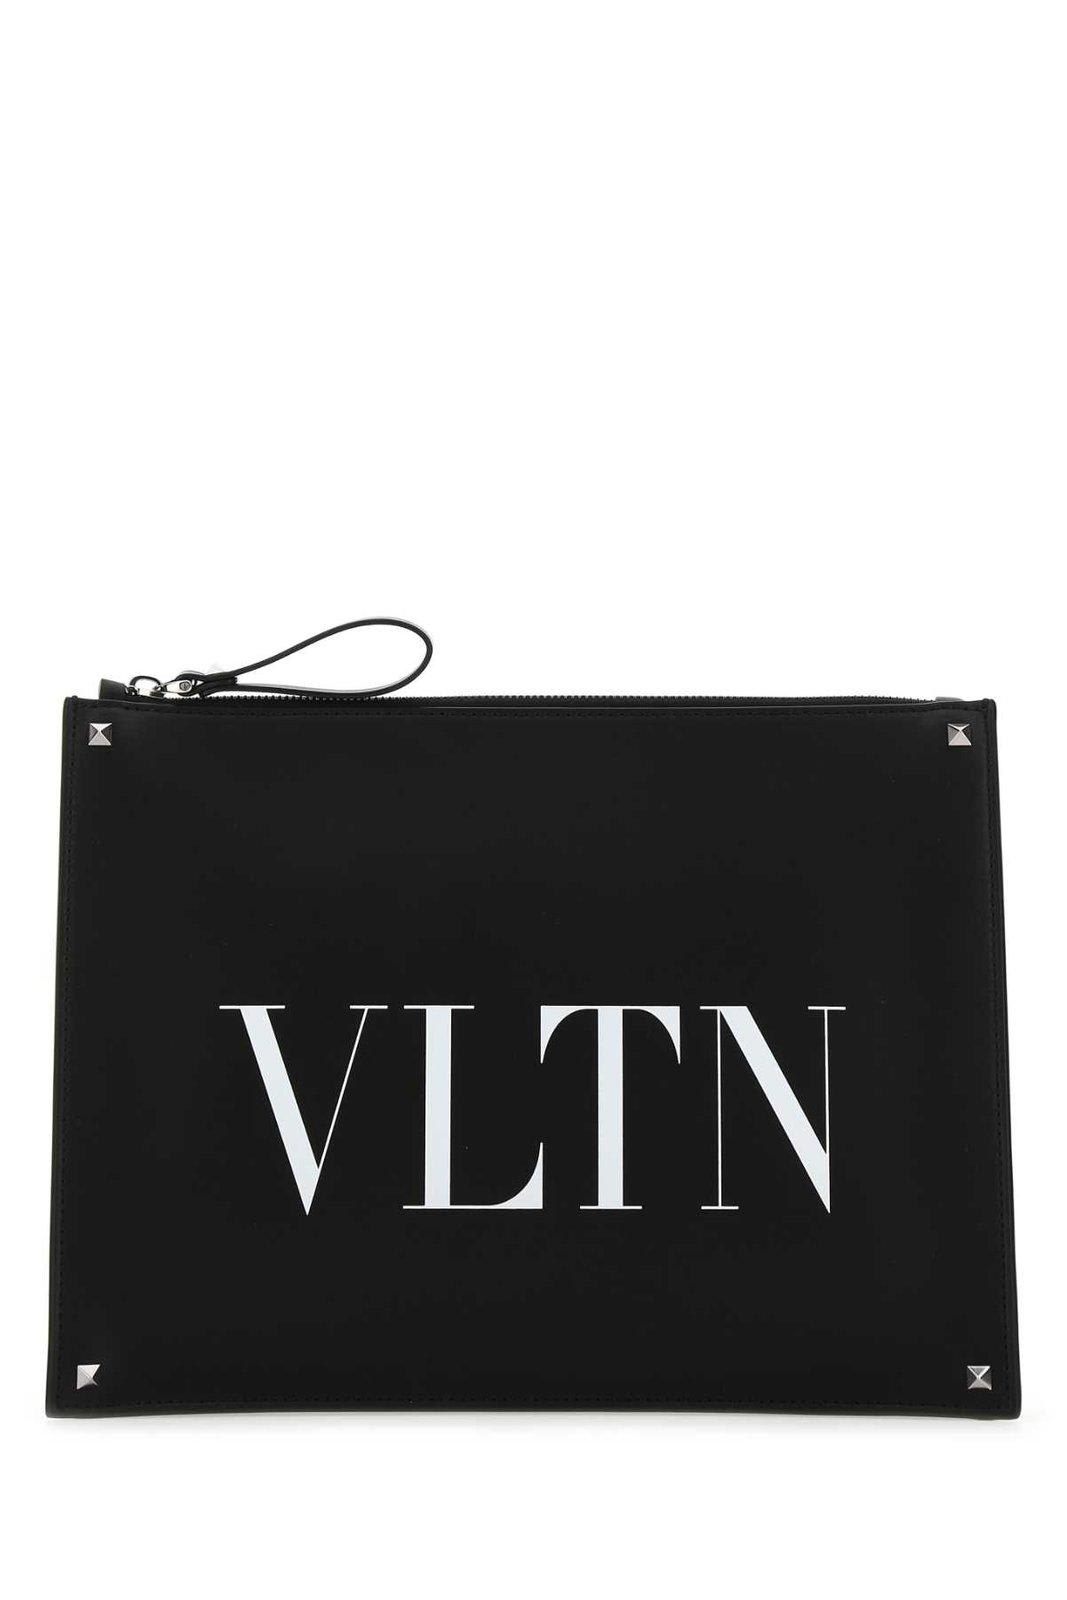 Valentino Logo Printed Zip-up Clutch Bag